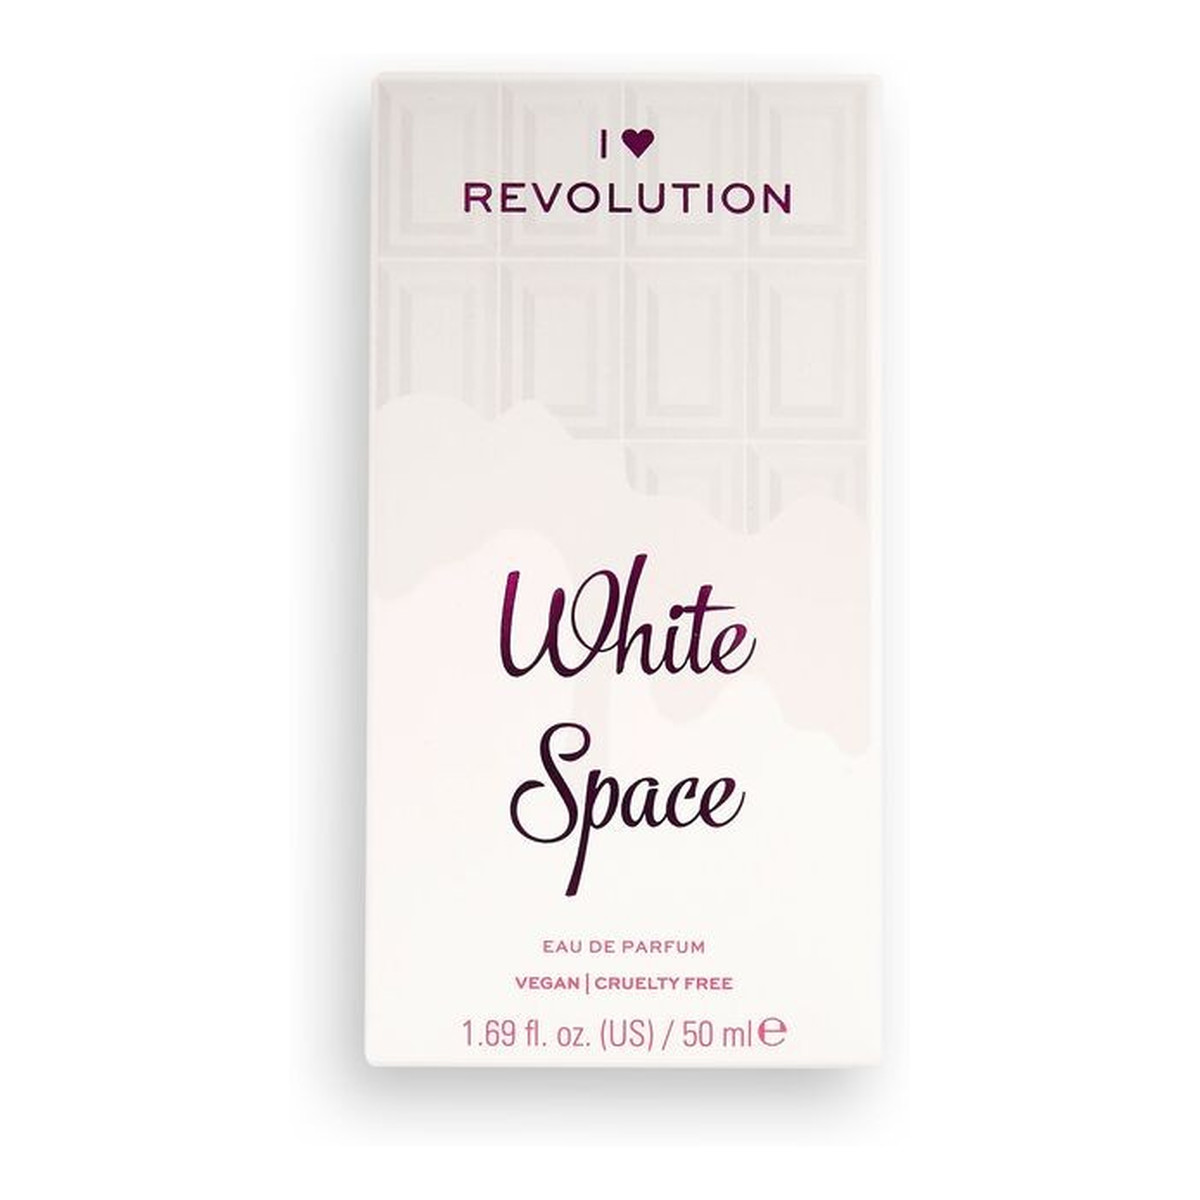 Makeup Revolution I Heart Revolution Eau de Parfum White Space woda perfumowana 50ml